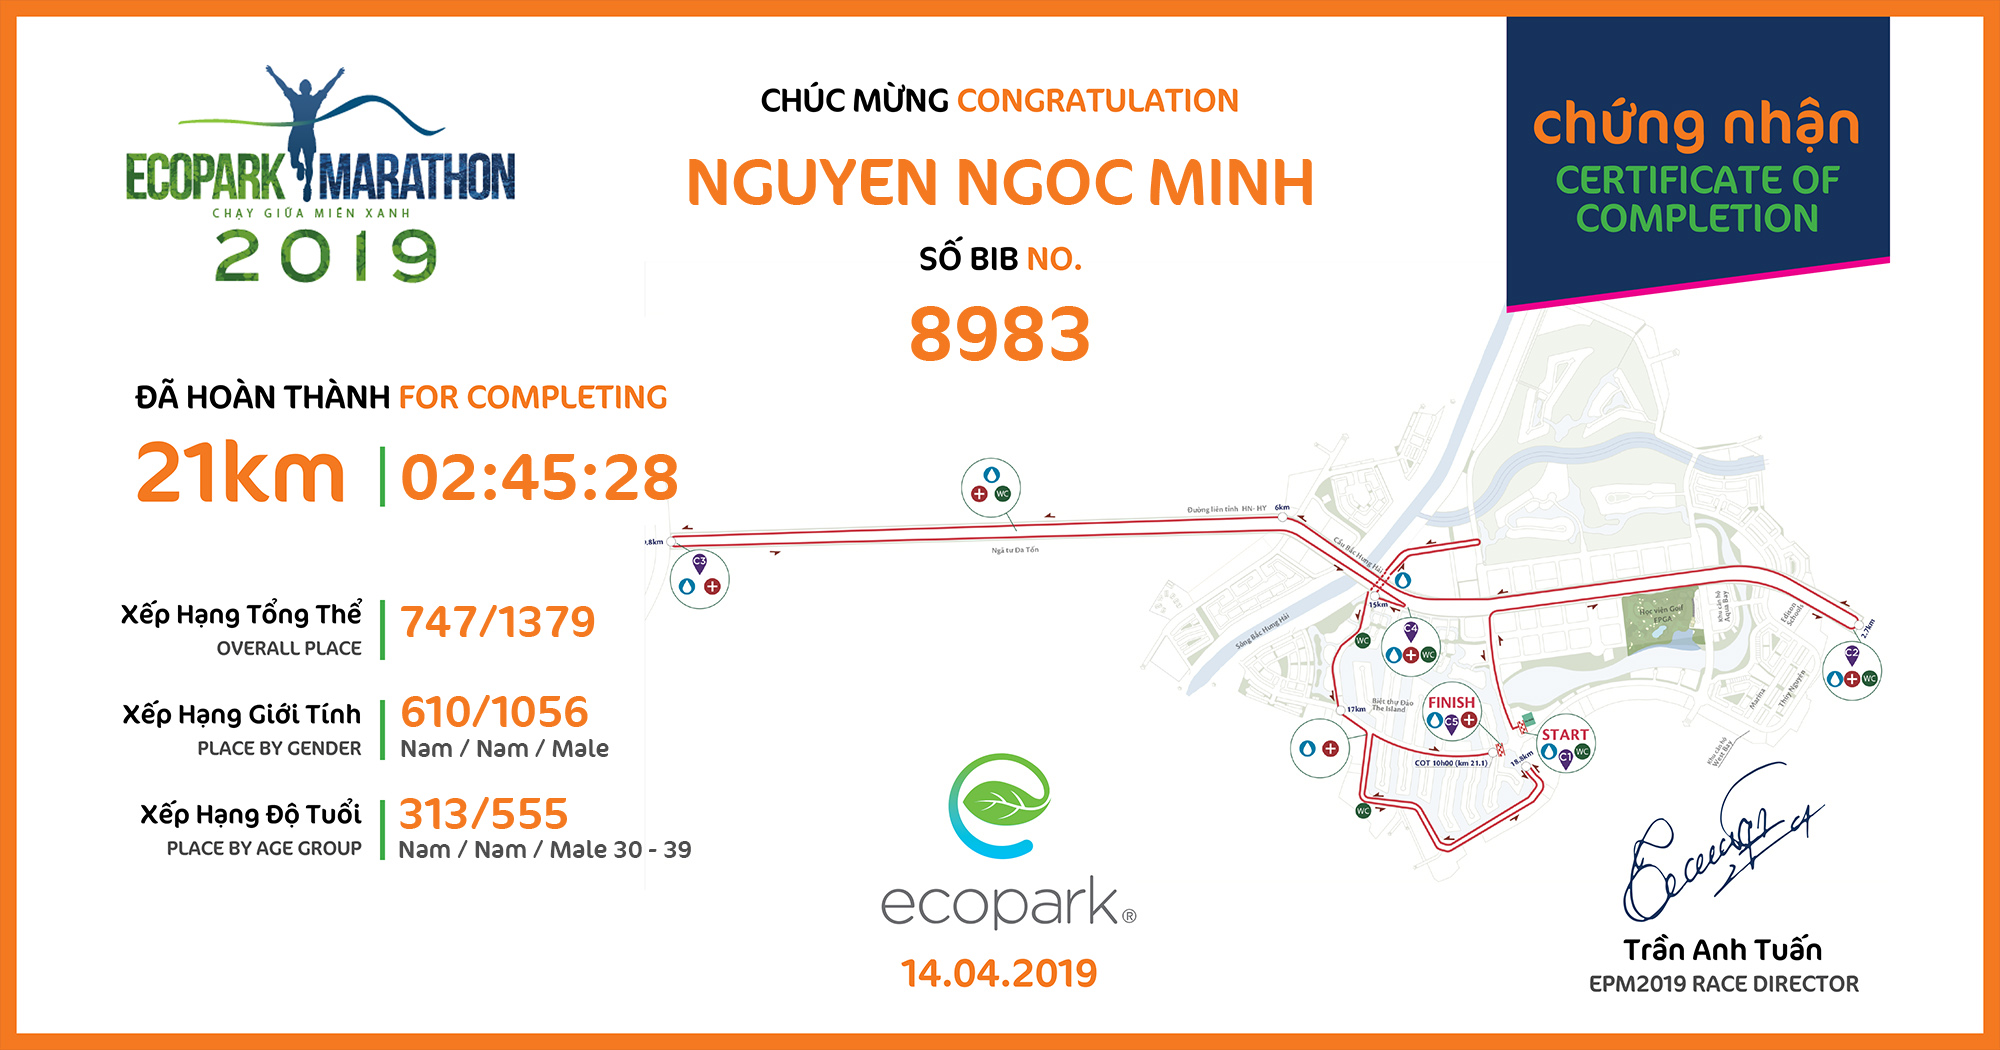 8983 - Nguyen Ngoc Minh